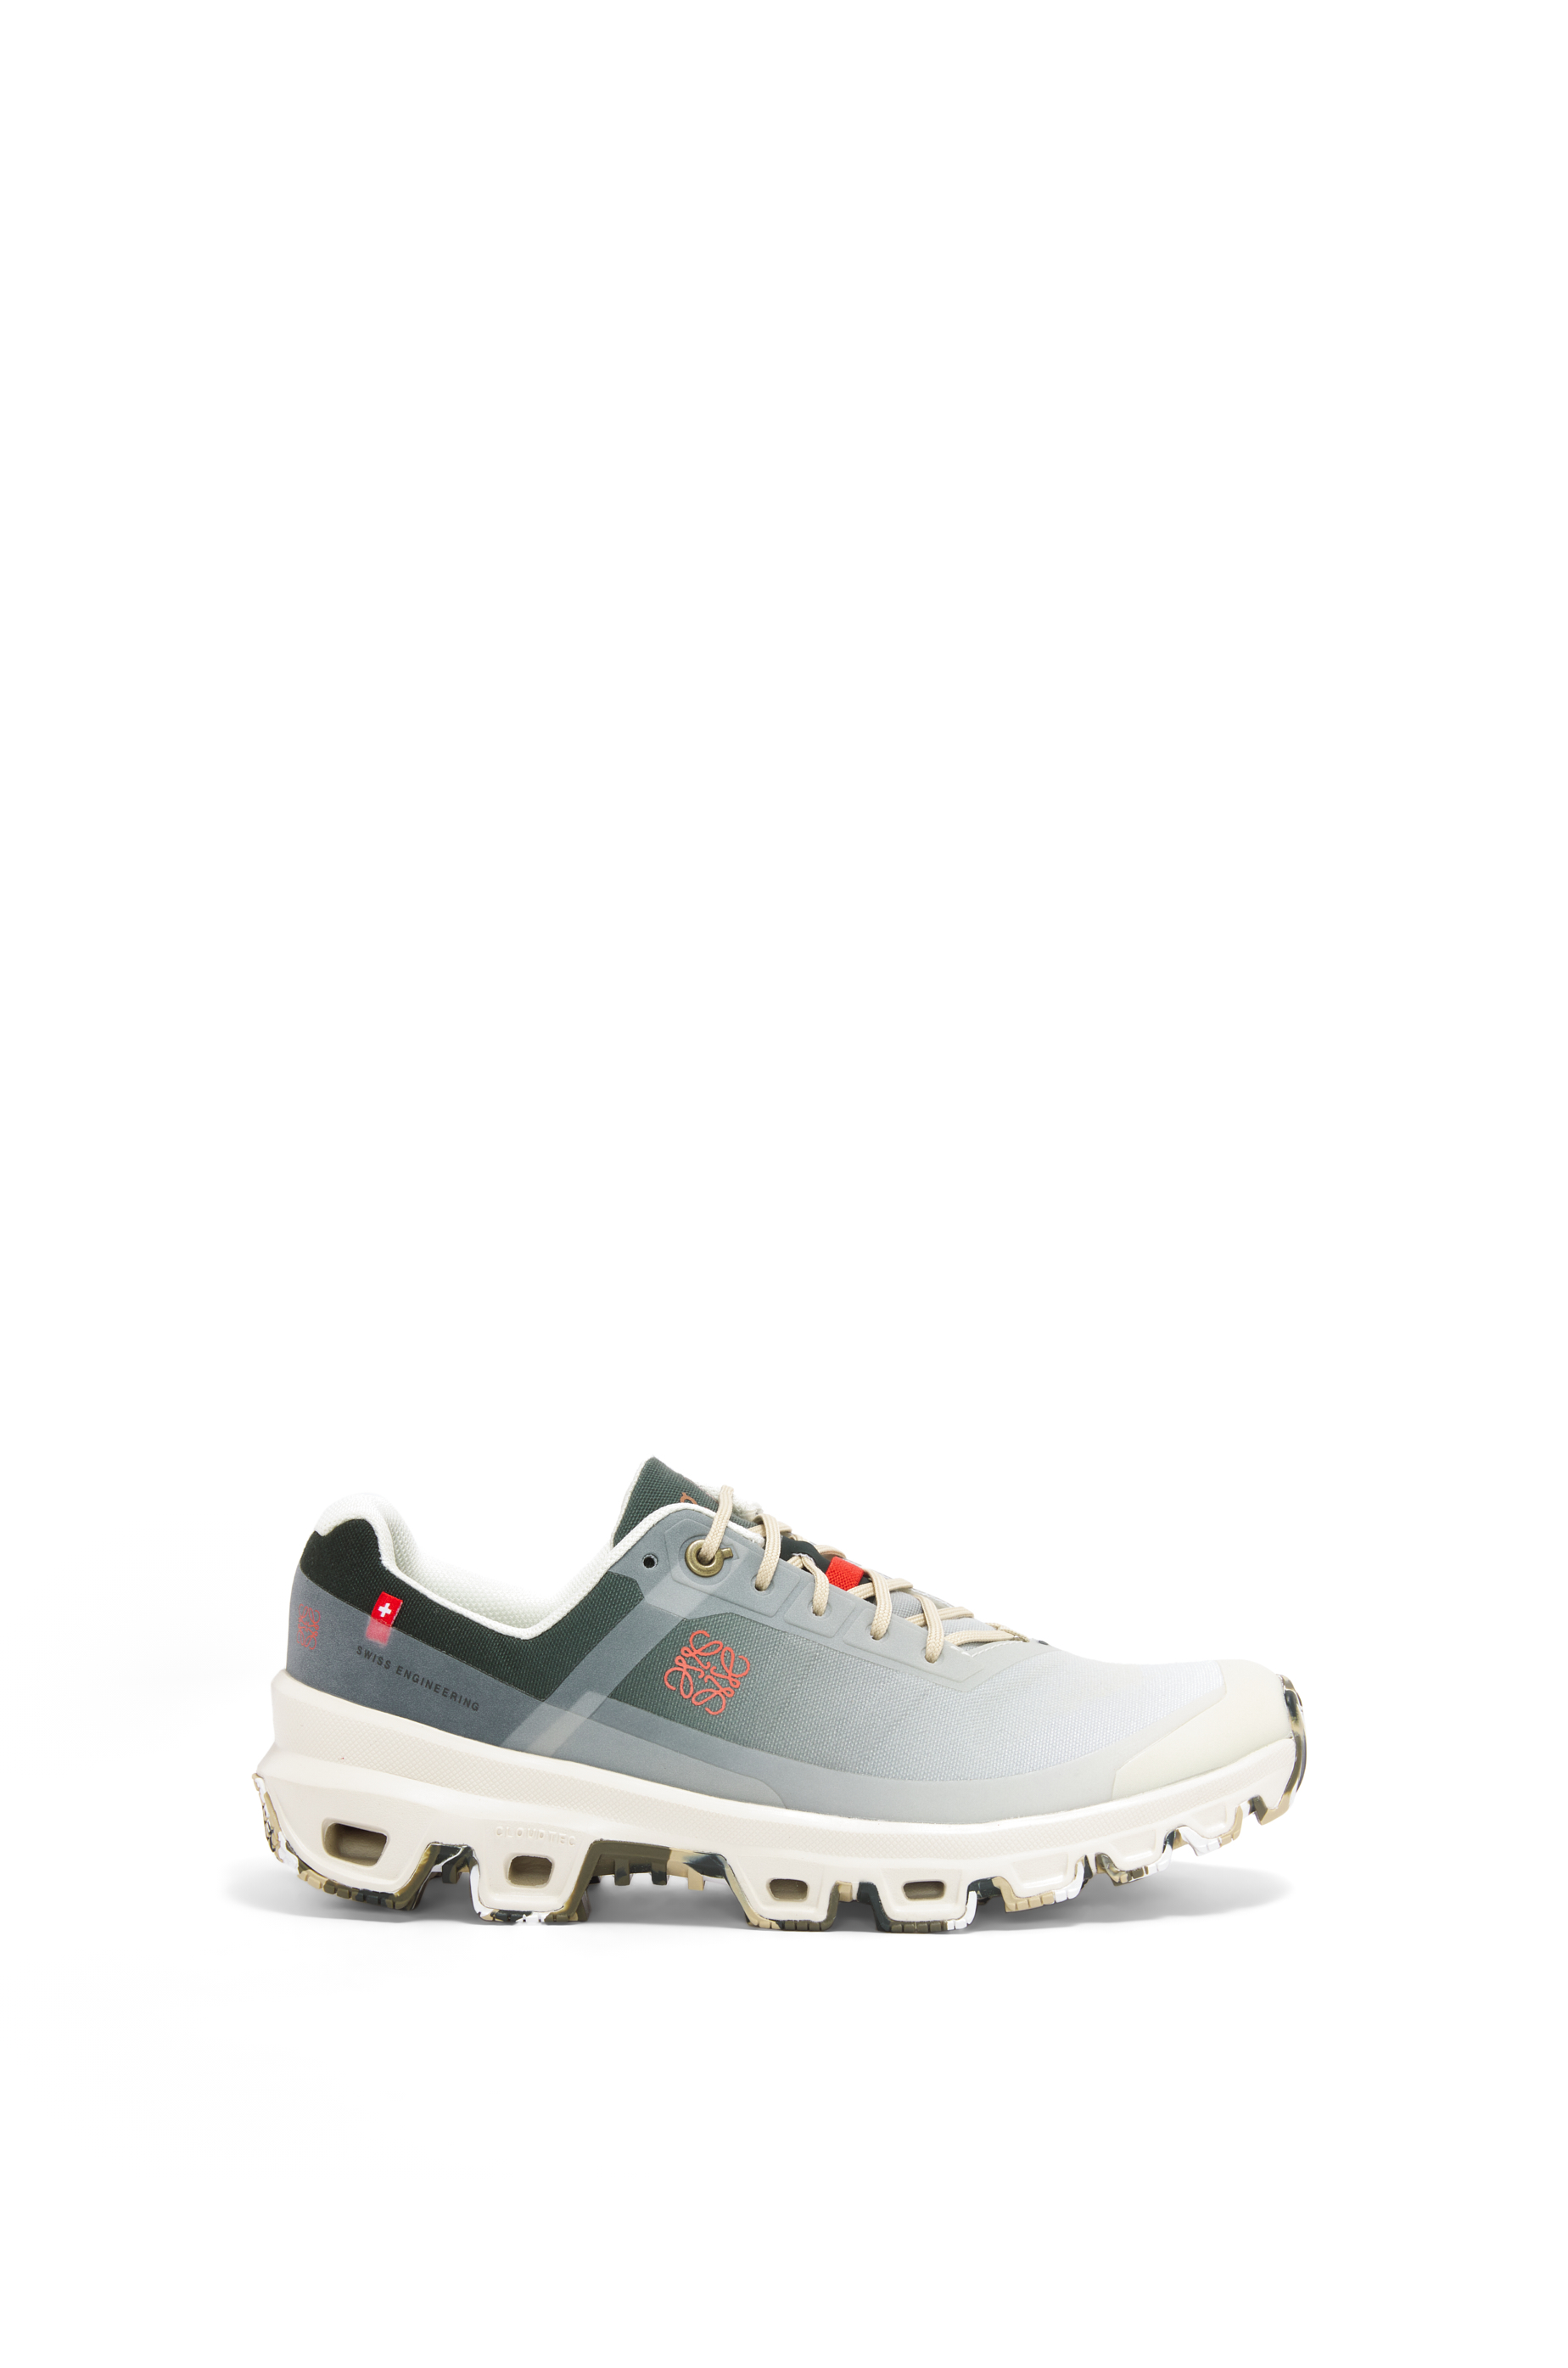 Cloudventure running shoe in nylon